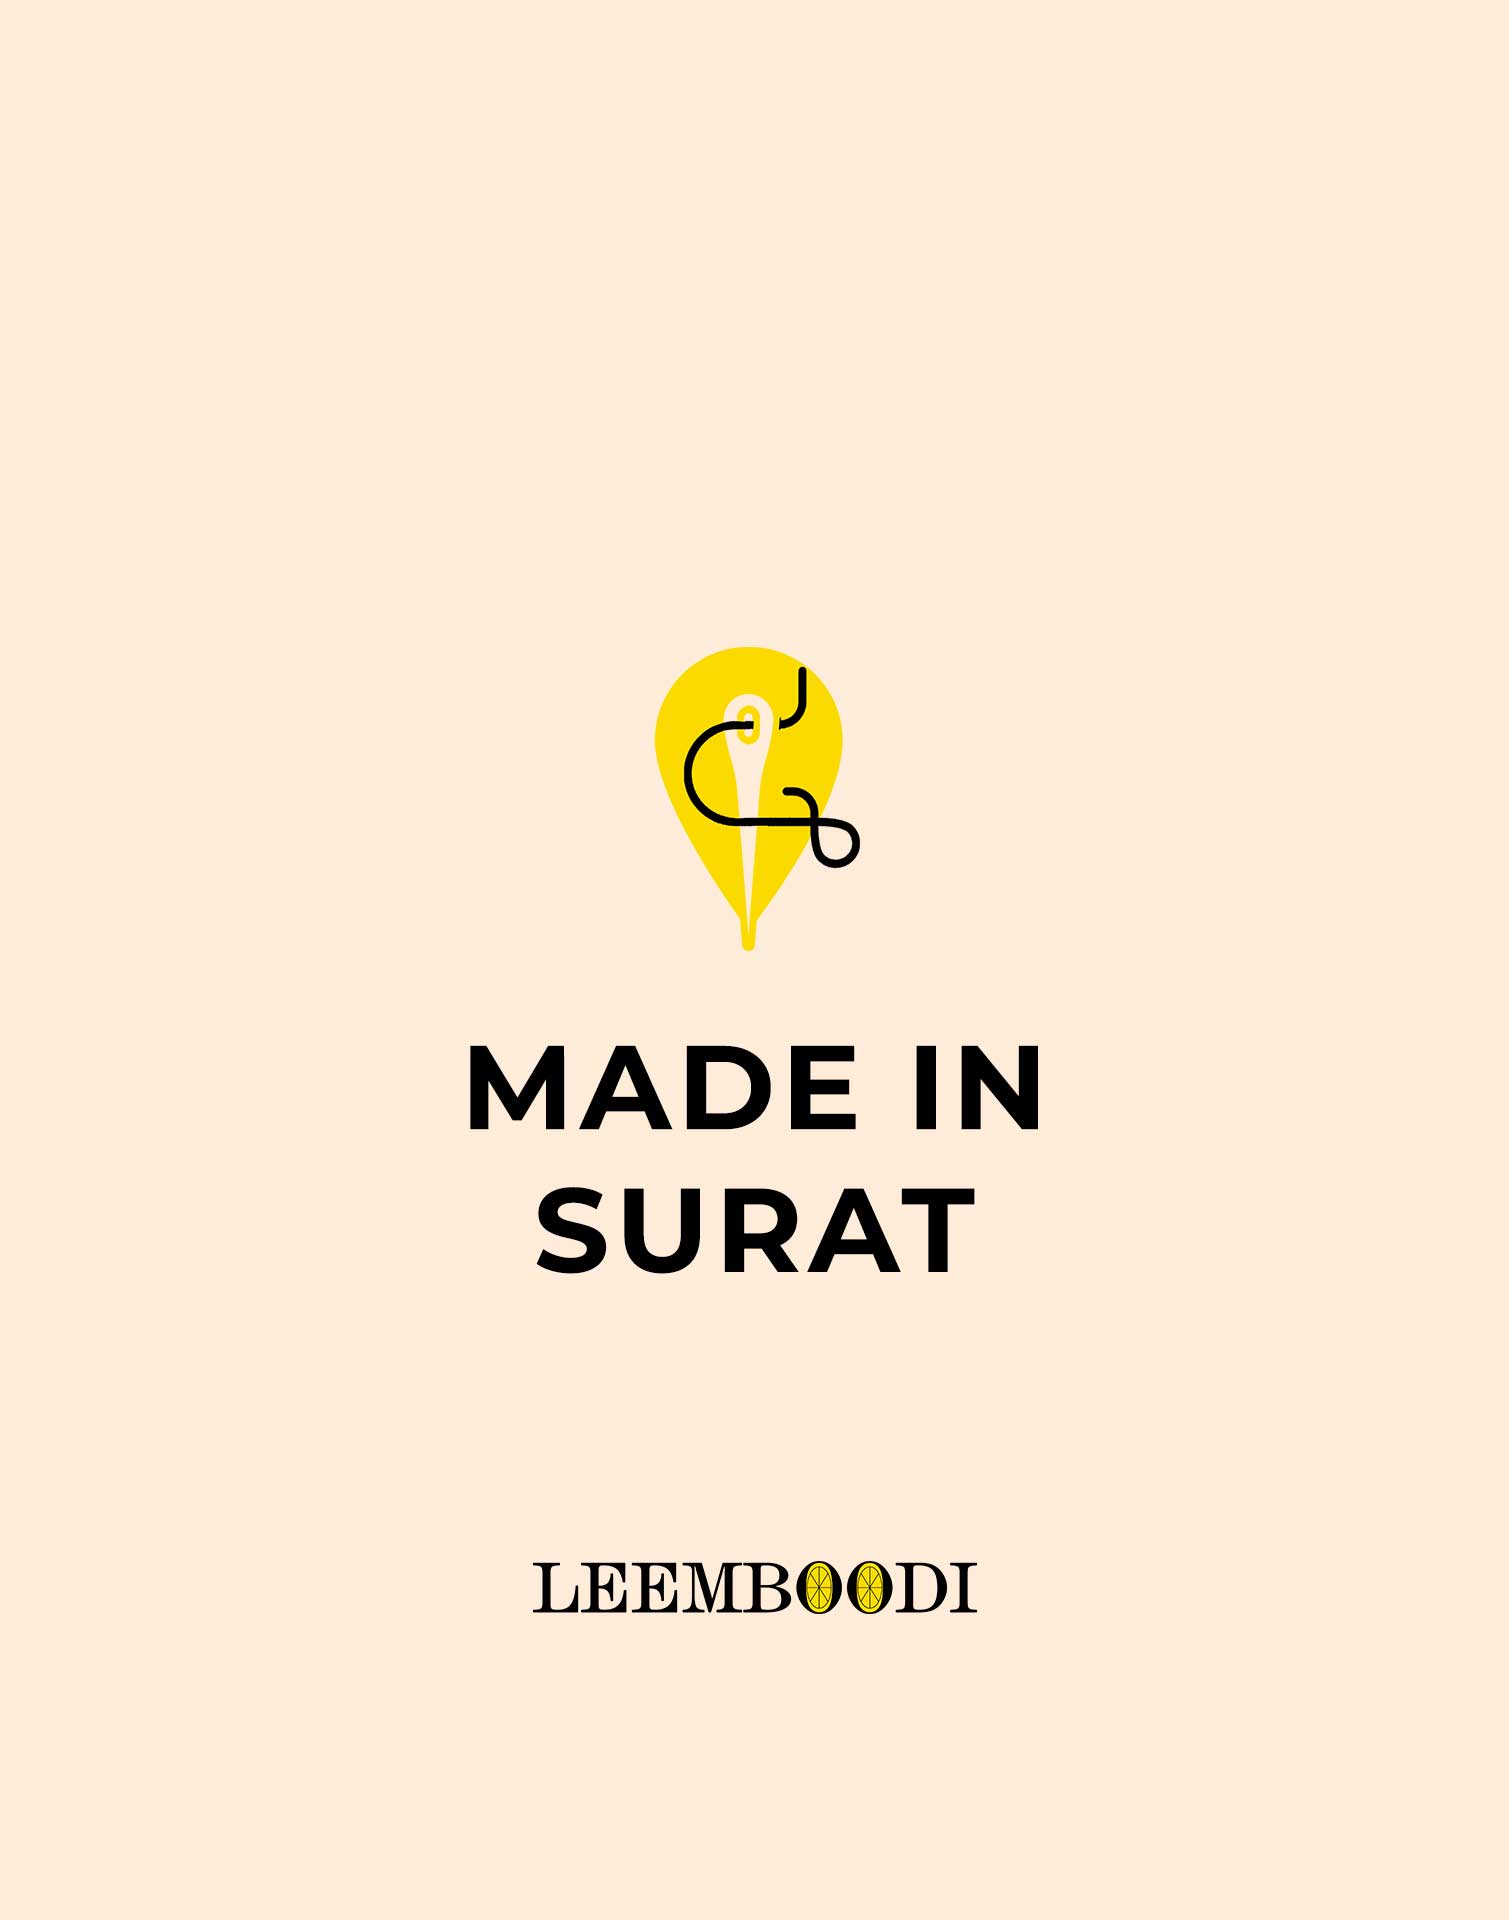 Yellow Coloured Cotton Silk Woven Checks Casual saree | Sudathi